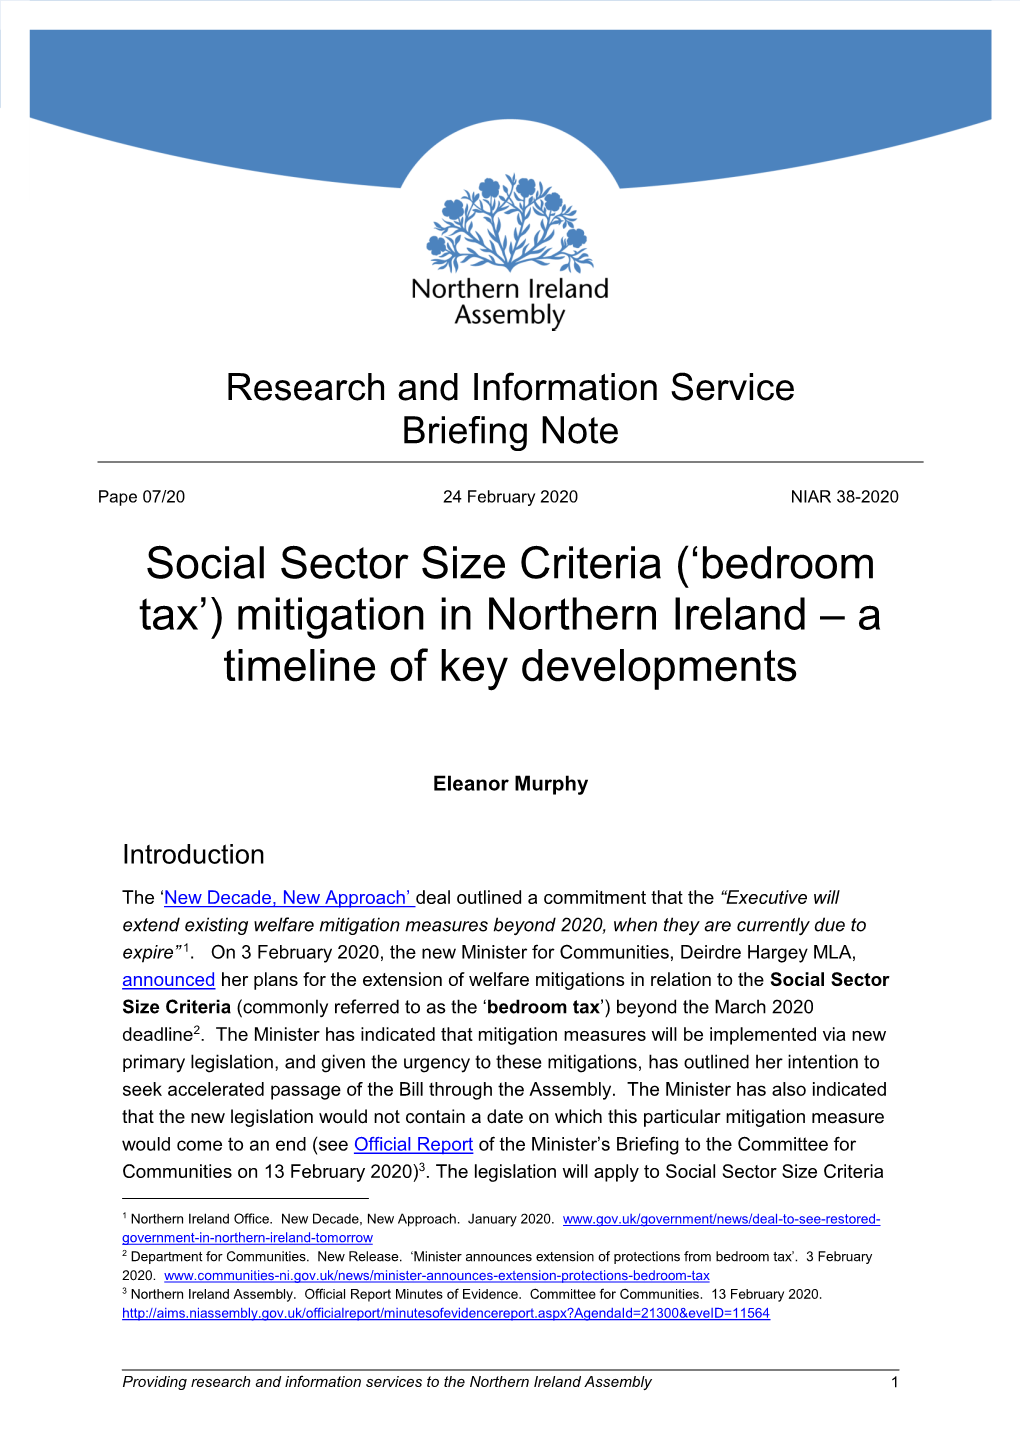 Social Sector Size Criteria ('Bedroom Tax')